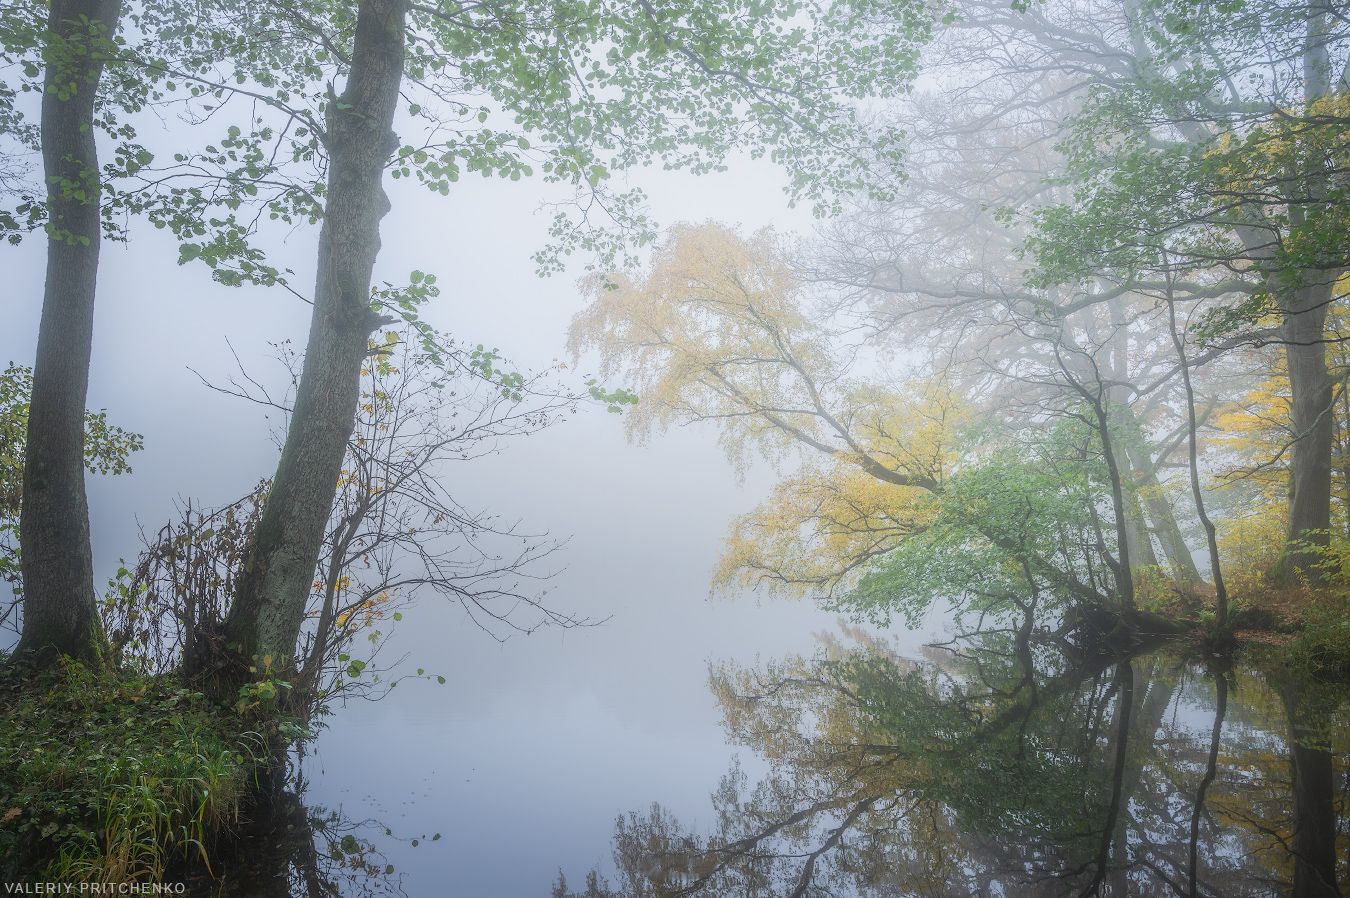 осень, пейзаж, утро, туман, природа, nature, autumn, landscape, morning, calm, tree, lake, Валерий Притченко